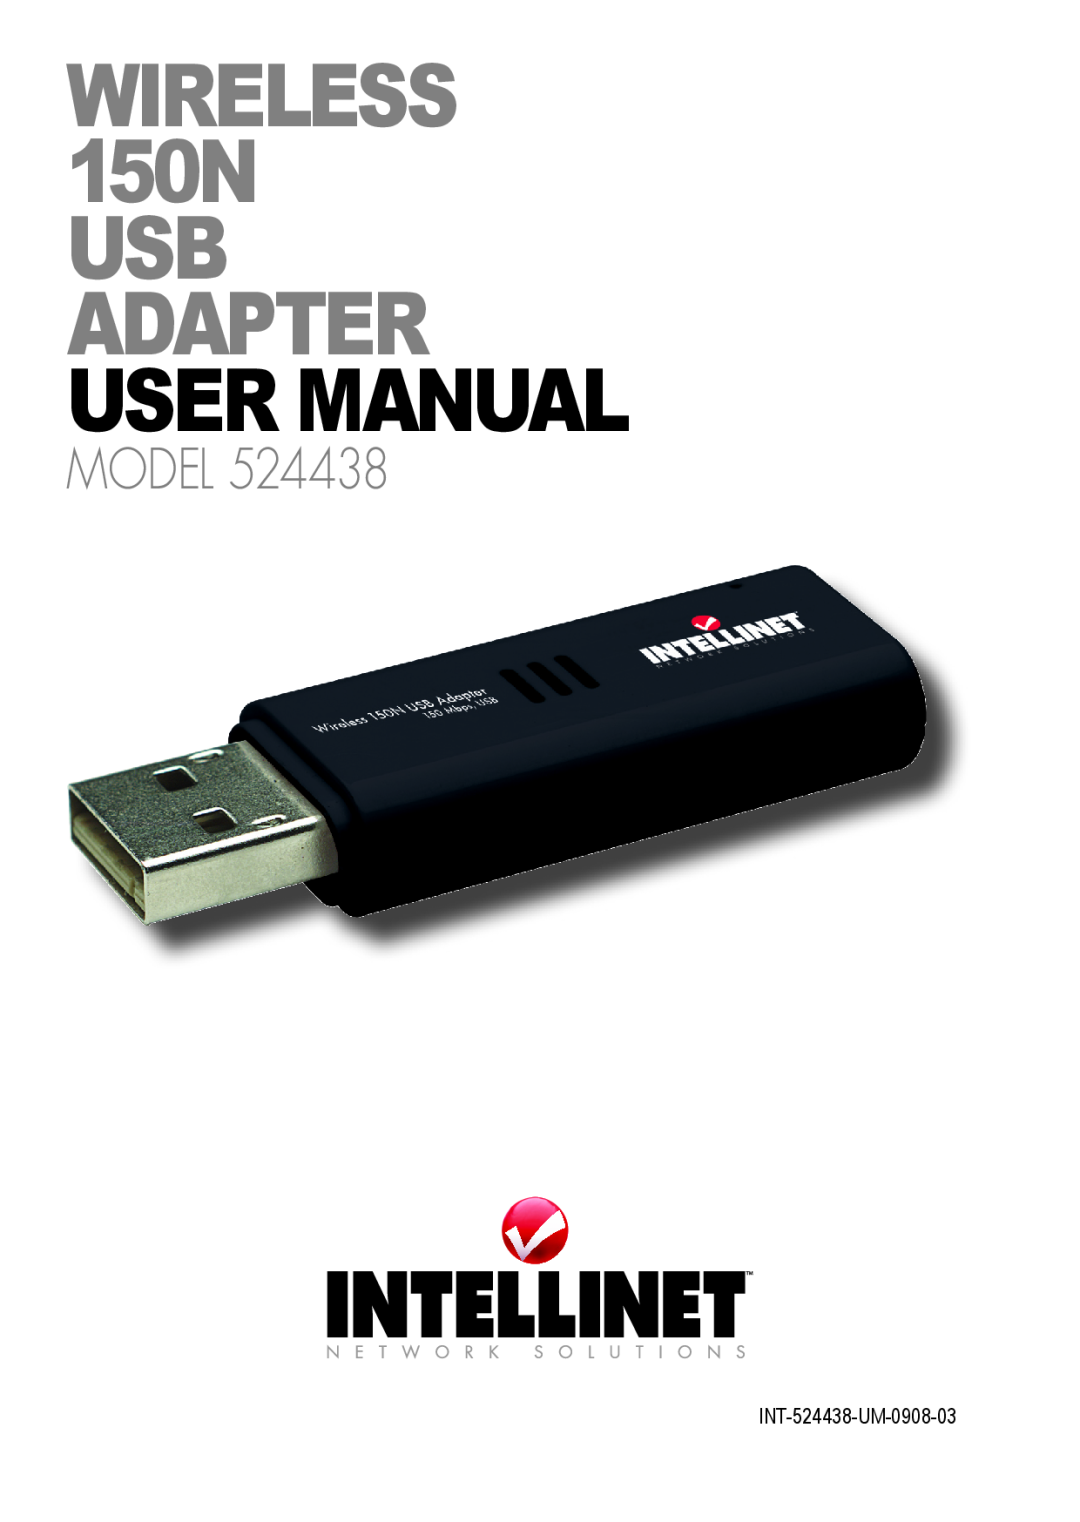 Intellinet Network Solutions user manual Wireless 150N USB Adapter user manual, Model, INT-524438-UM-0908-03 